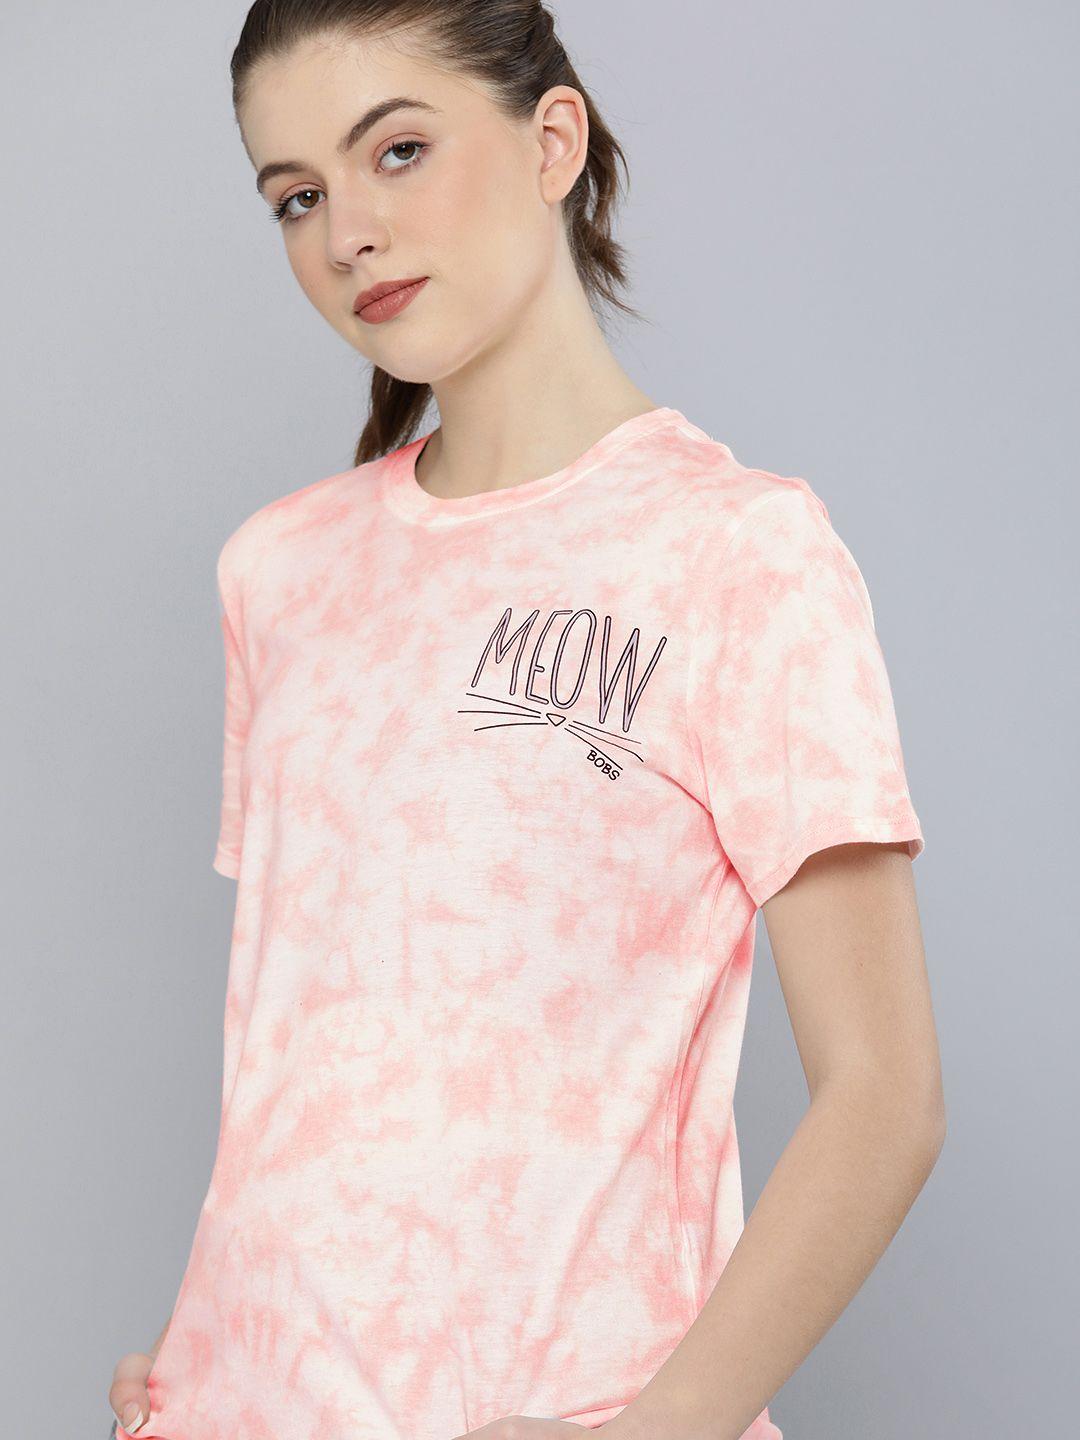 skechers-women-pink-meow-printed-t-shirt